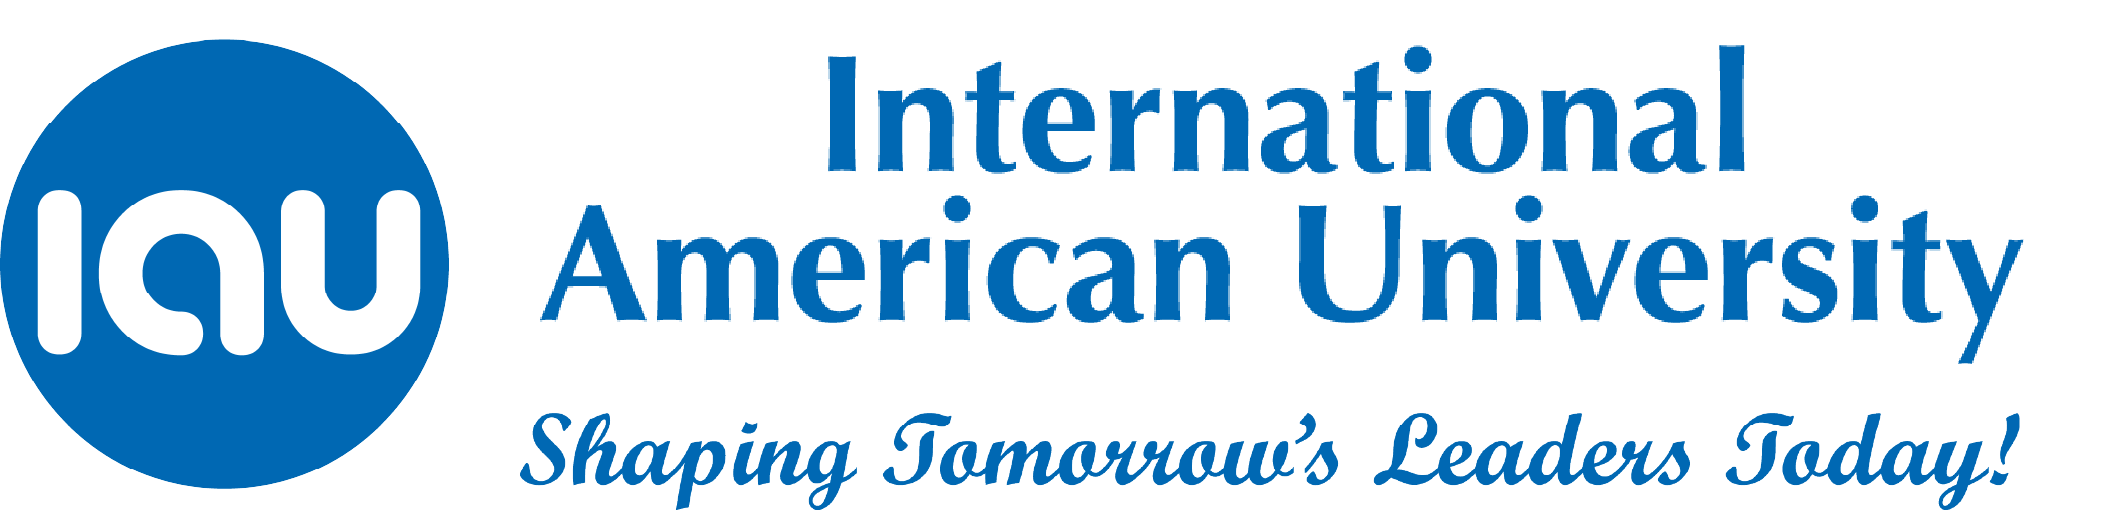 international american univerity logo